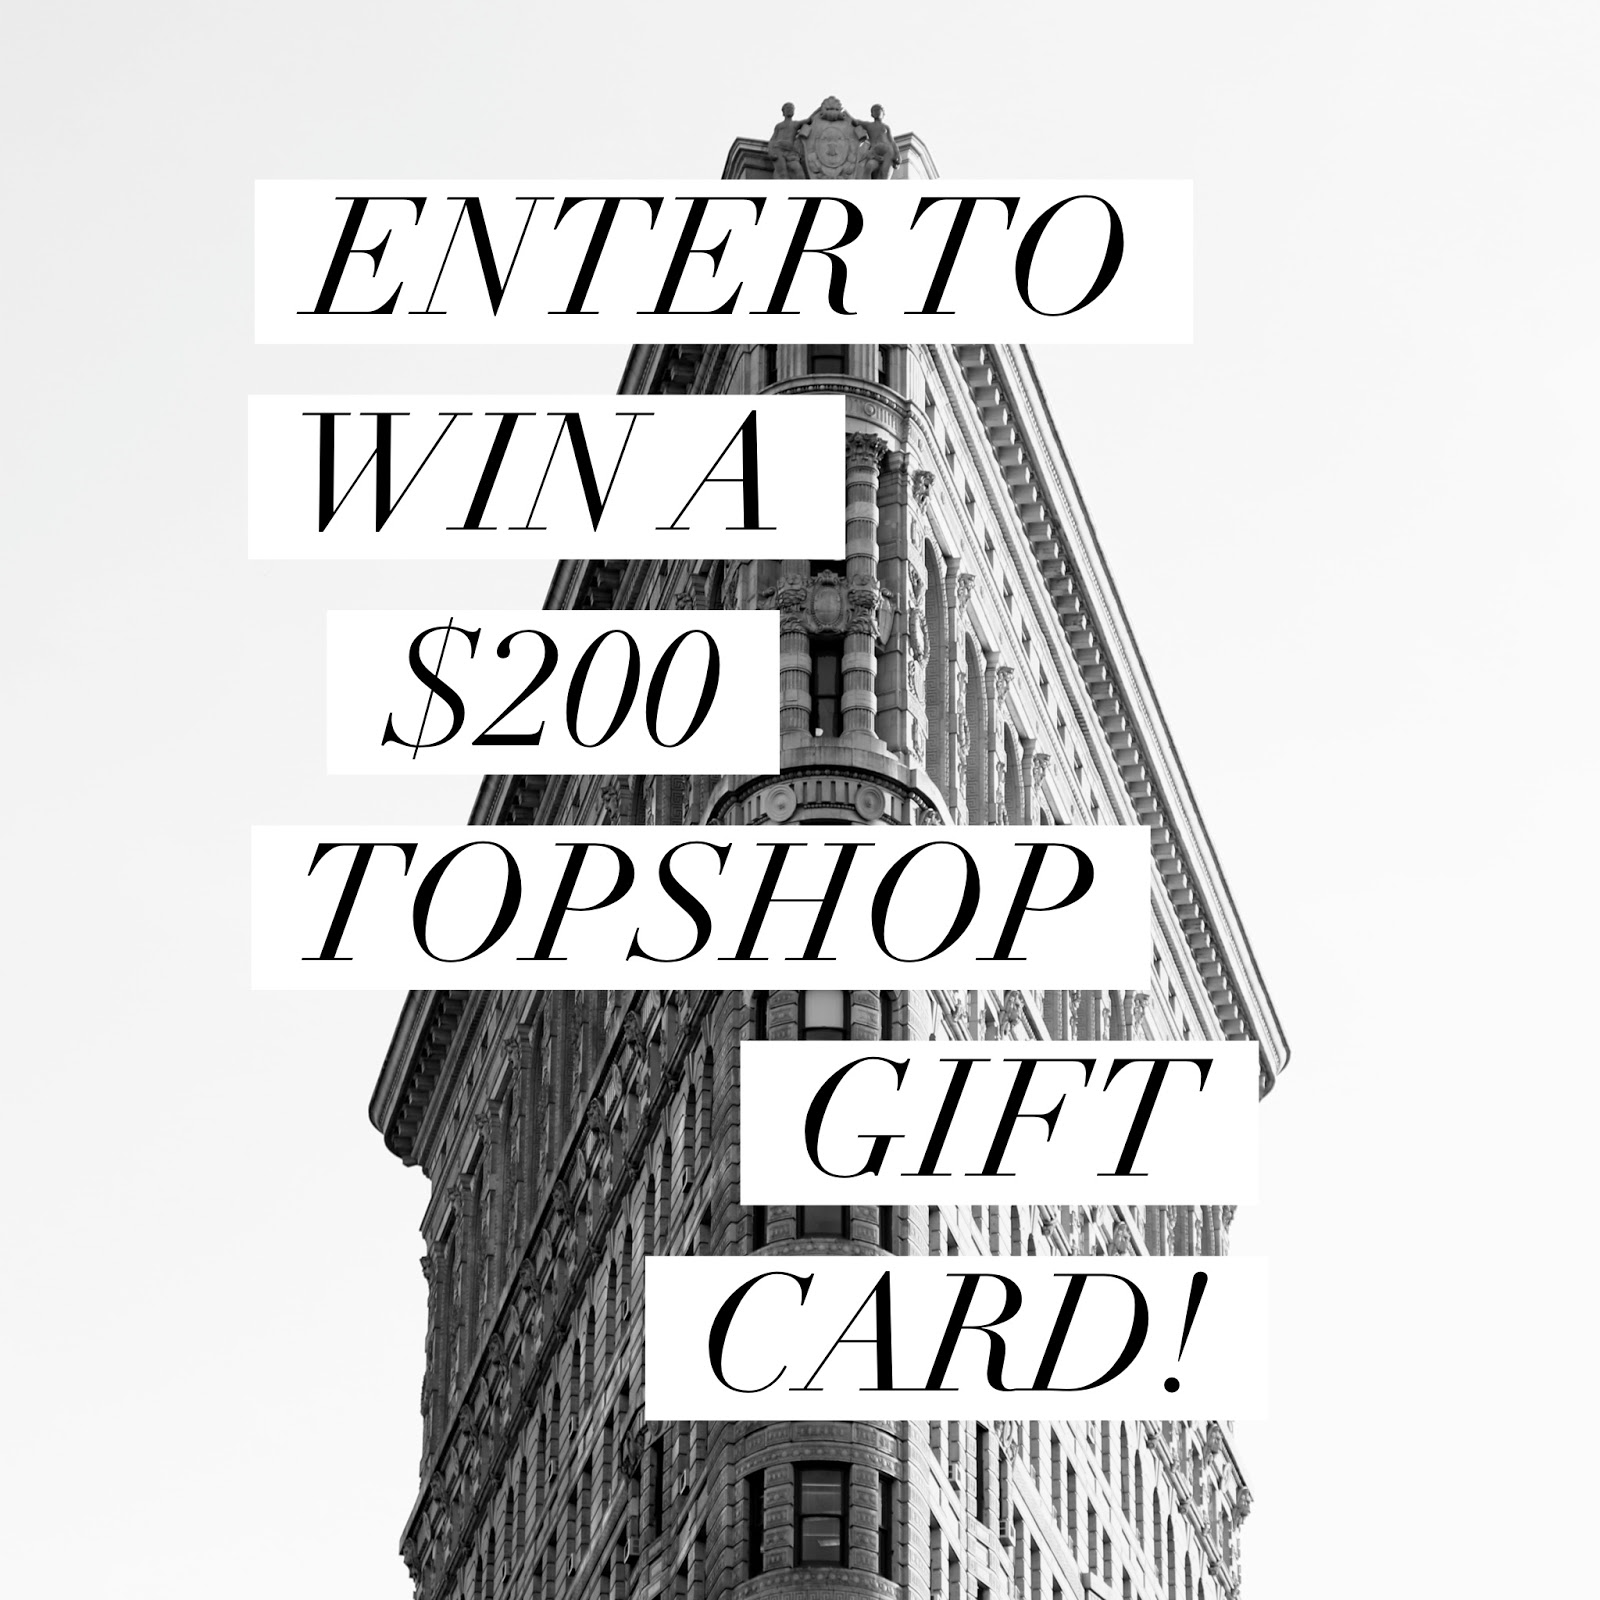 $200 Topshop Gift Card Giveaway #giveaway #topshop